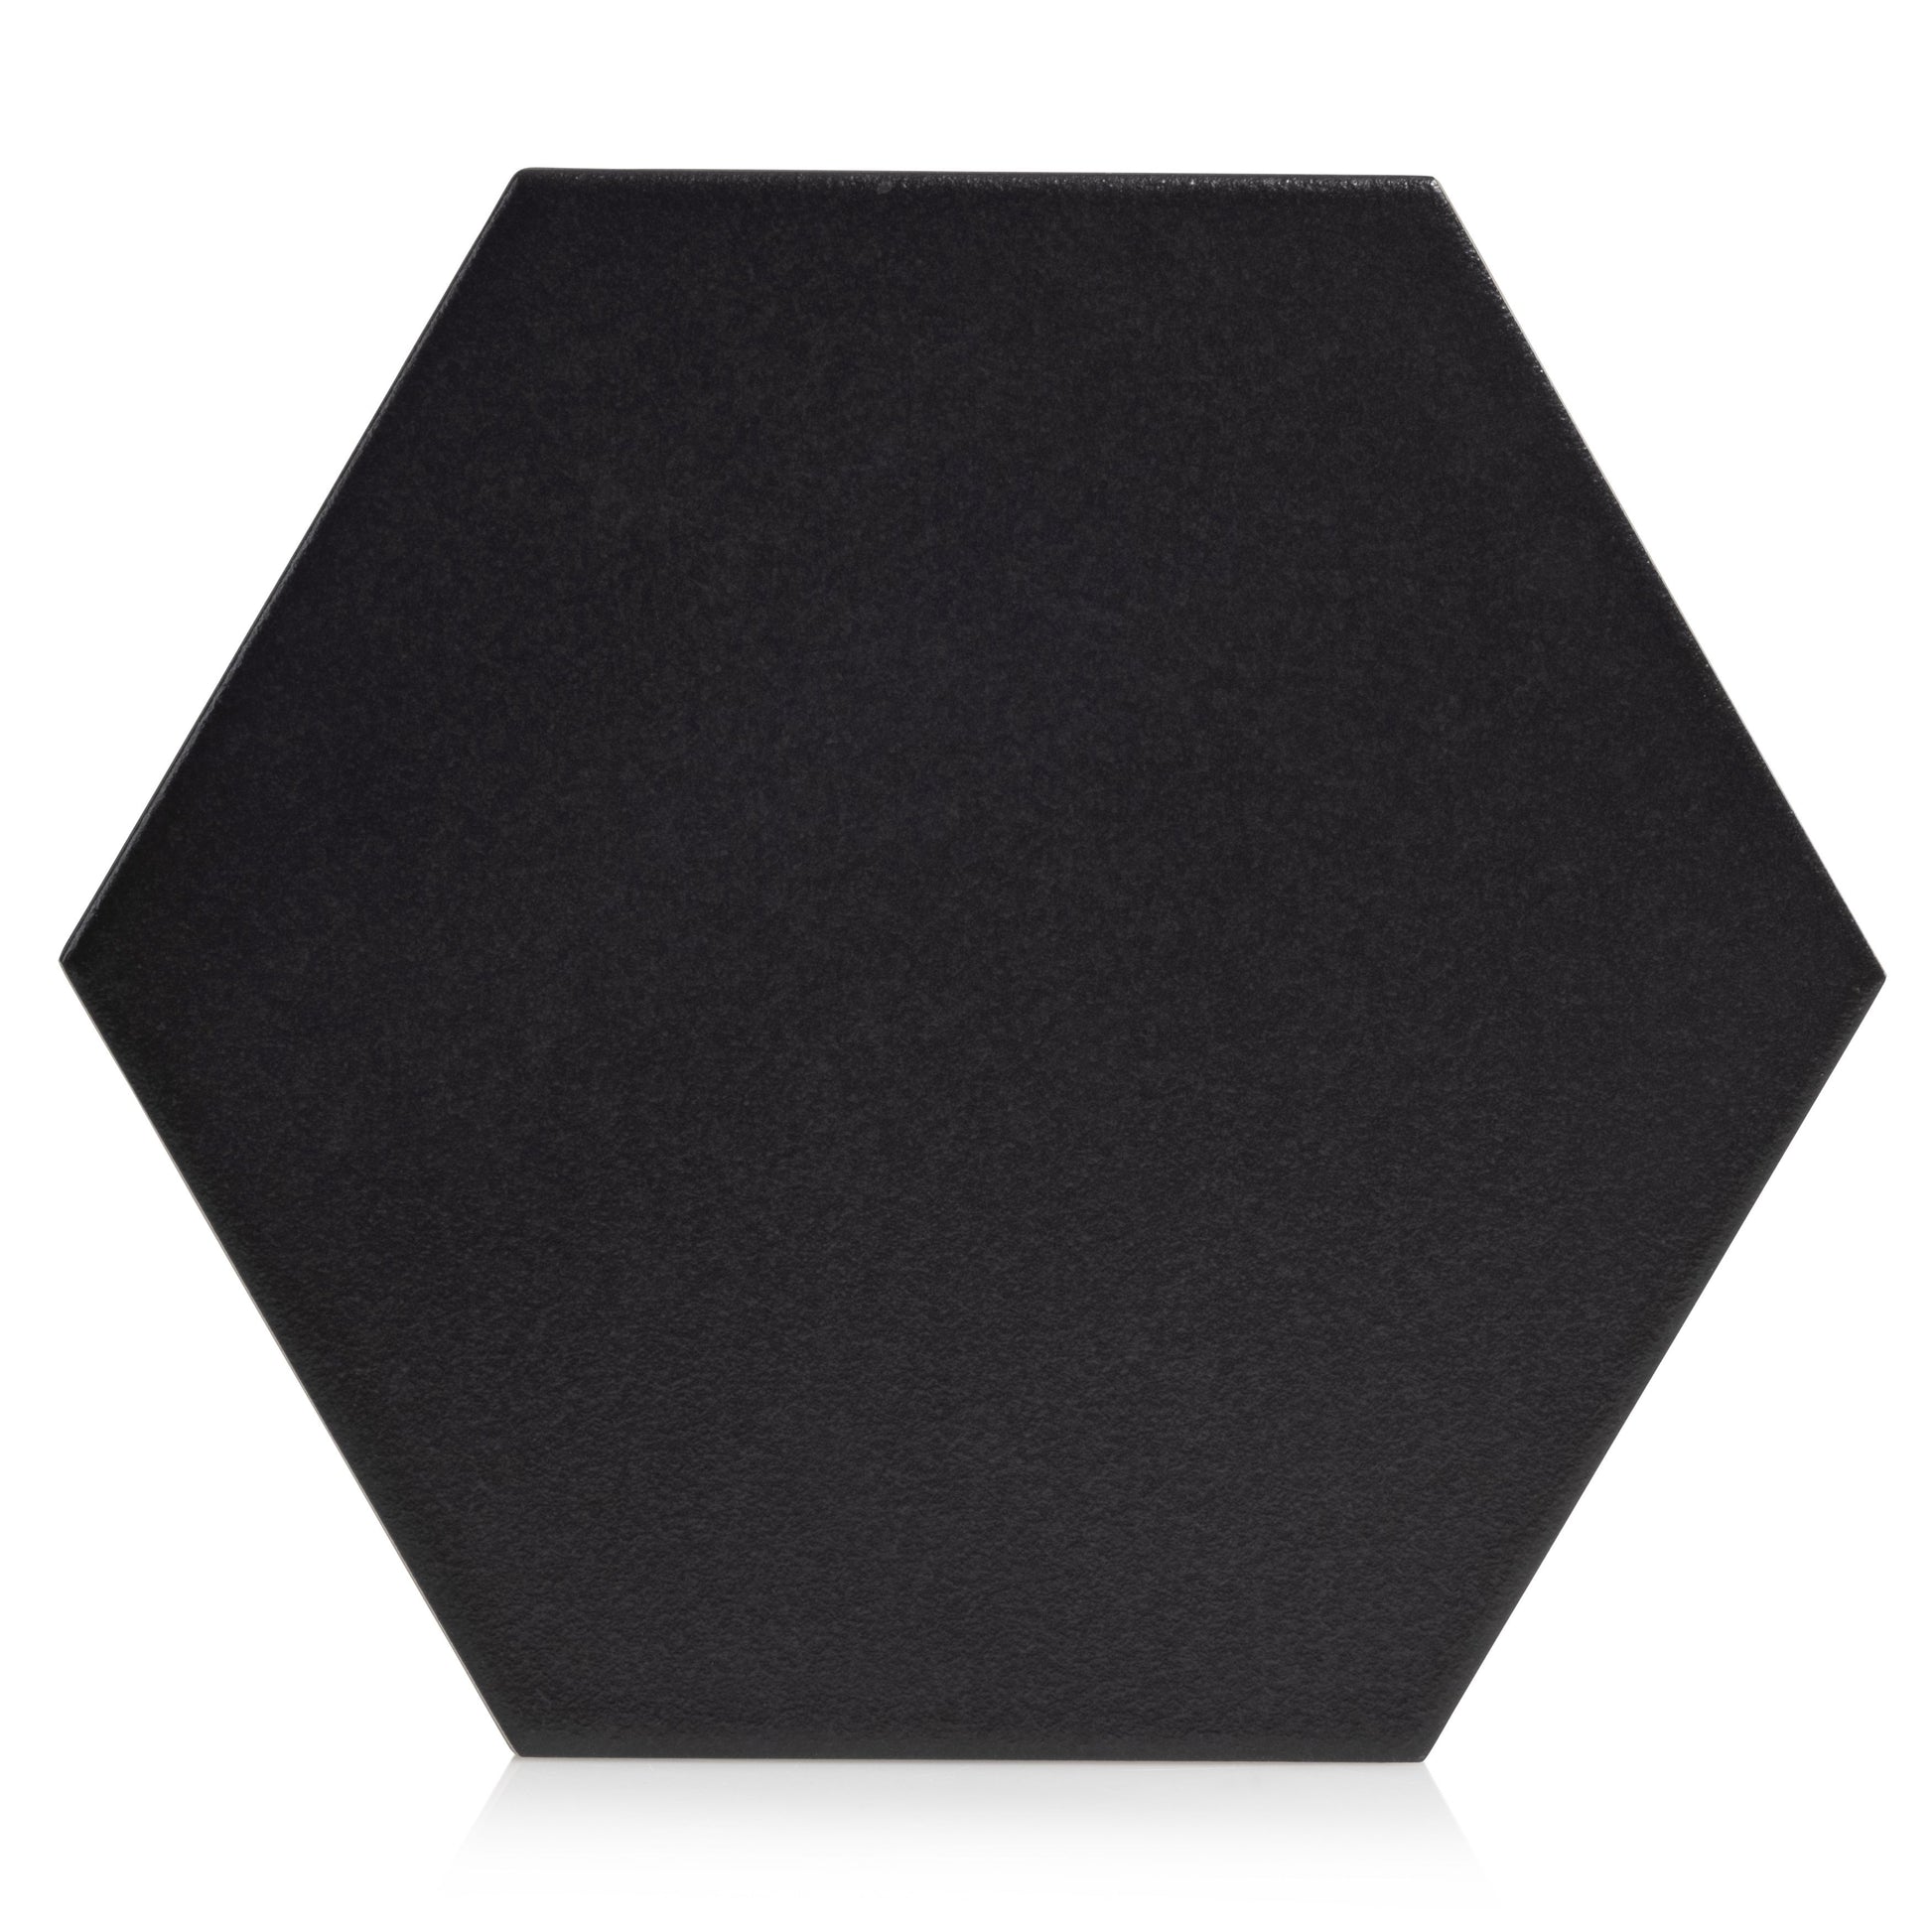 7.8x9 Tribeca Hexagon Black porcelain tile - Industry Tile